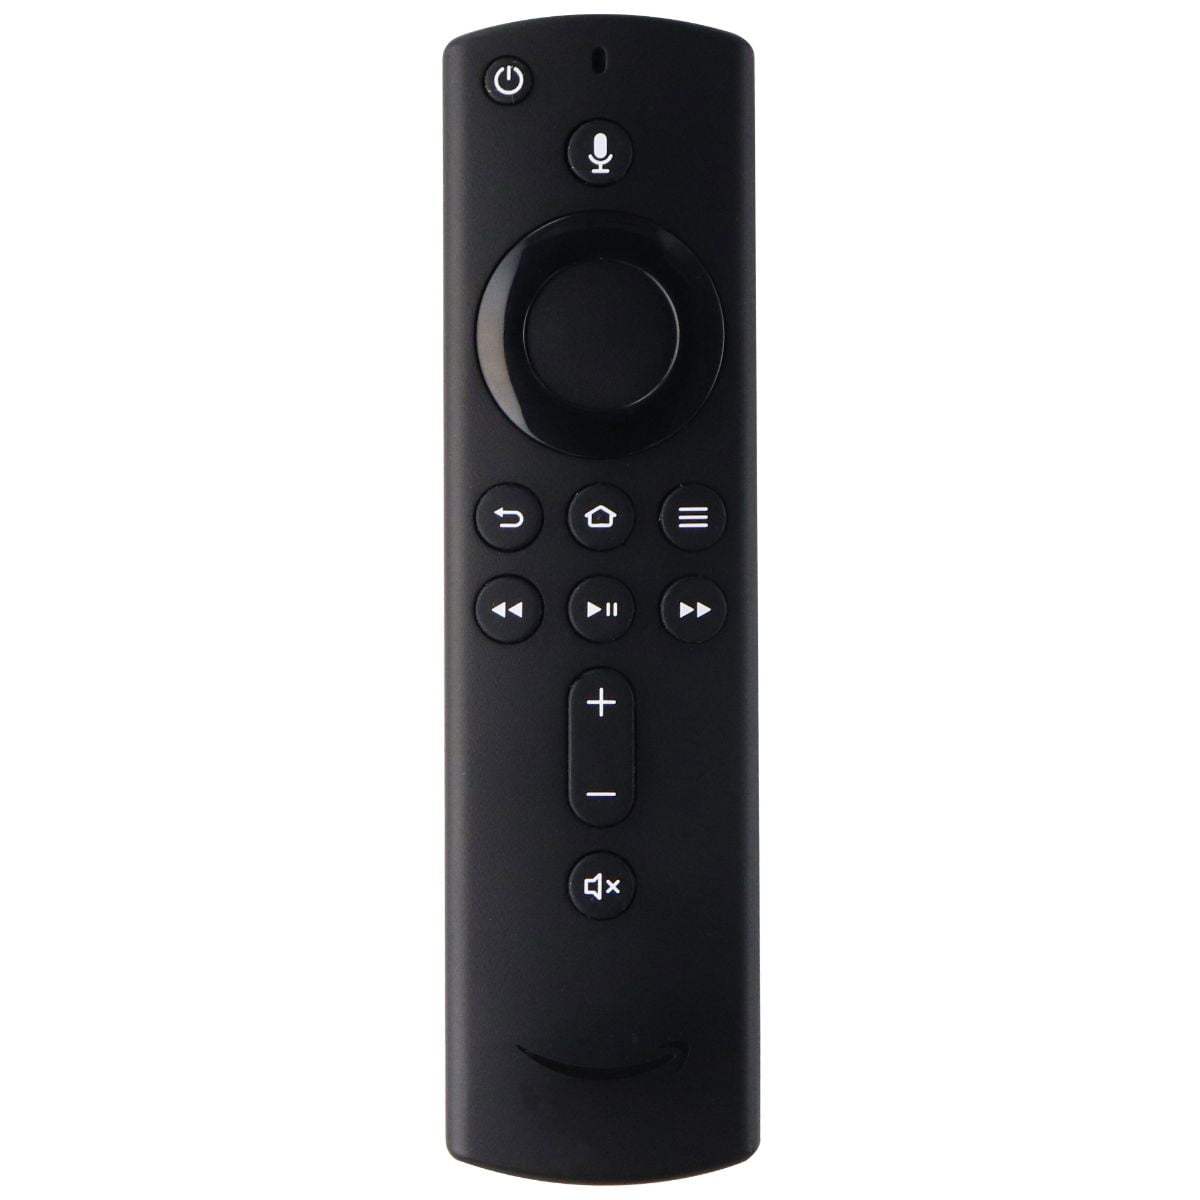 Amazon 3rd Gen. Voice Remote Control for Select Amazon Fire TVs/Sticks